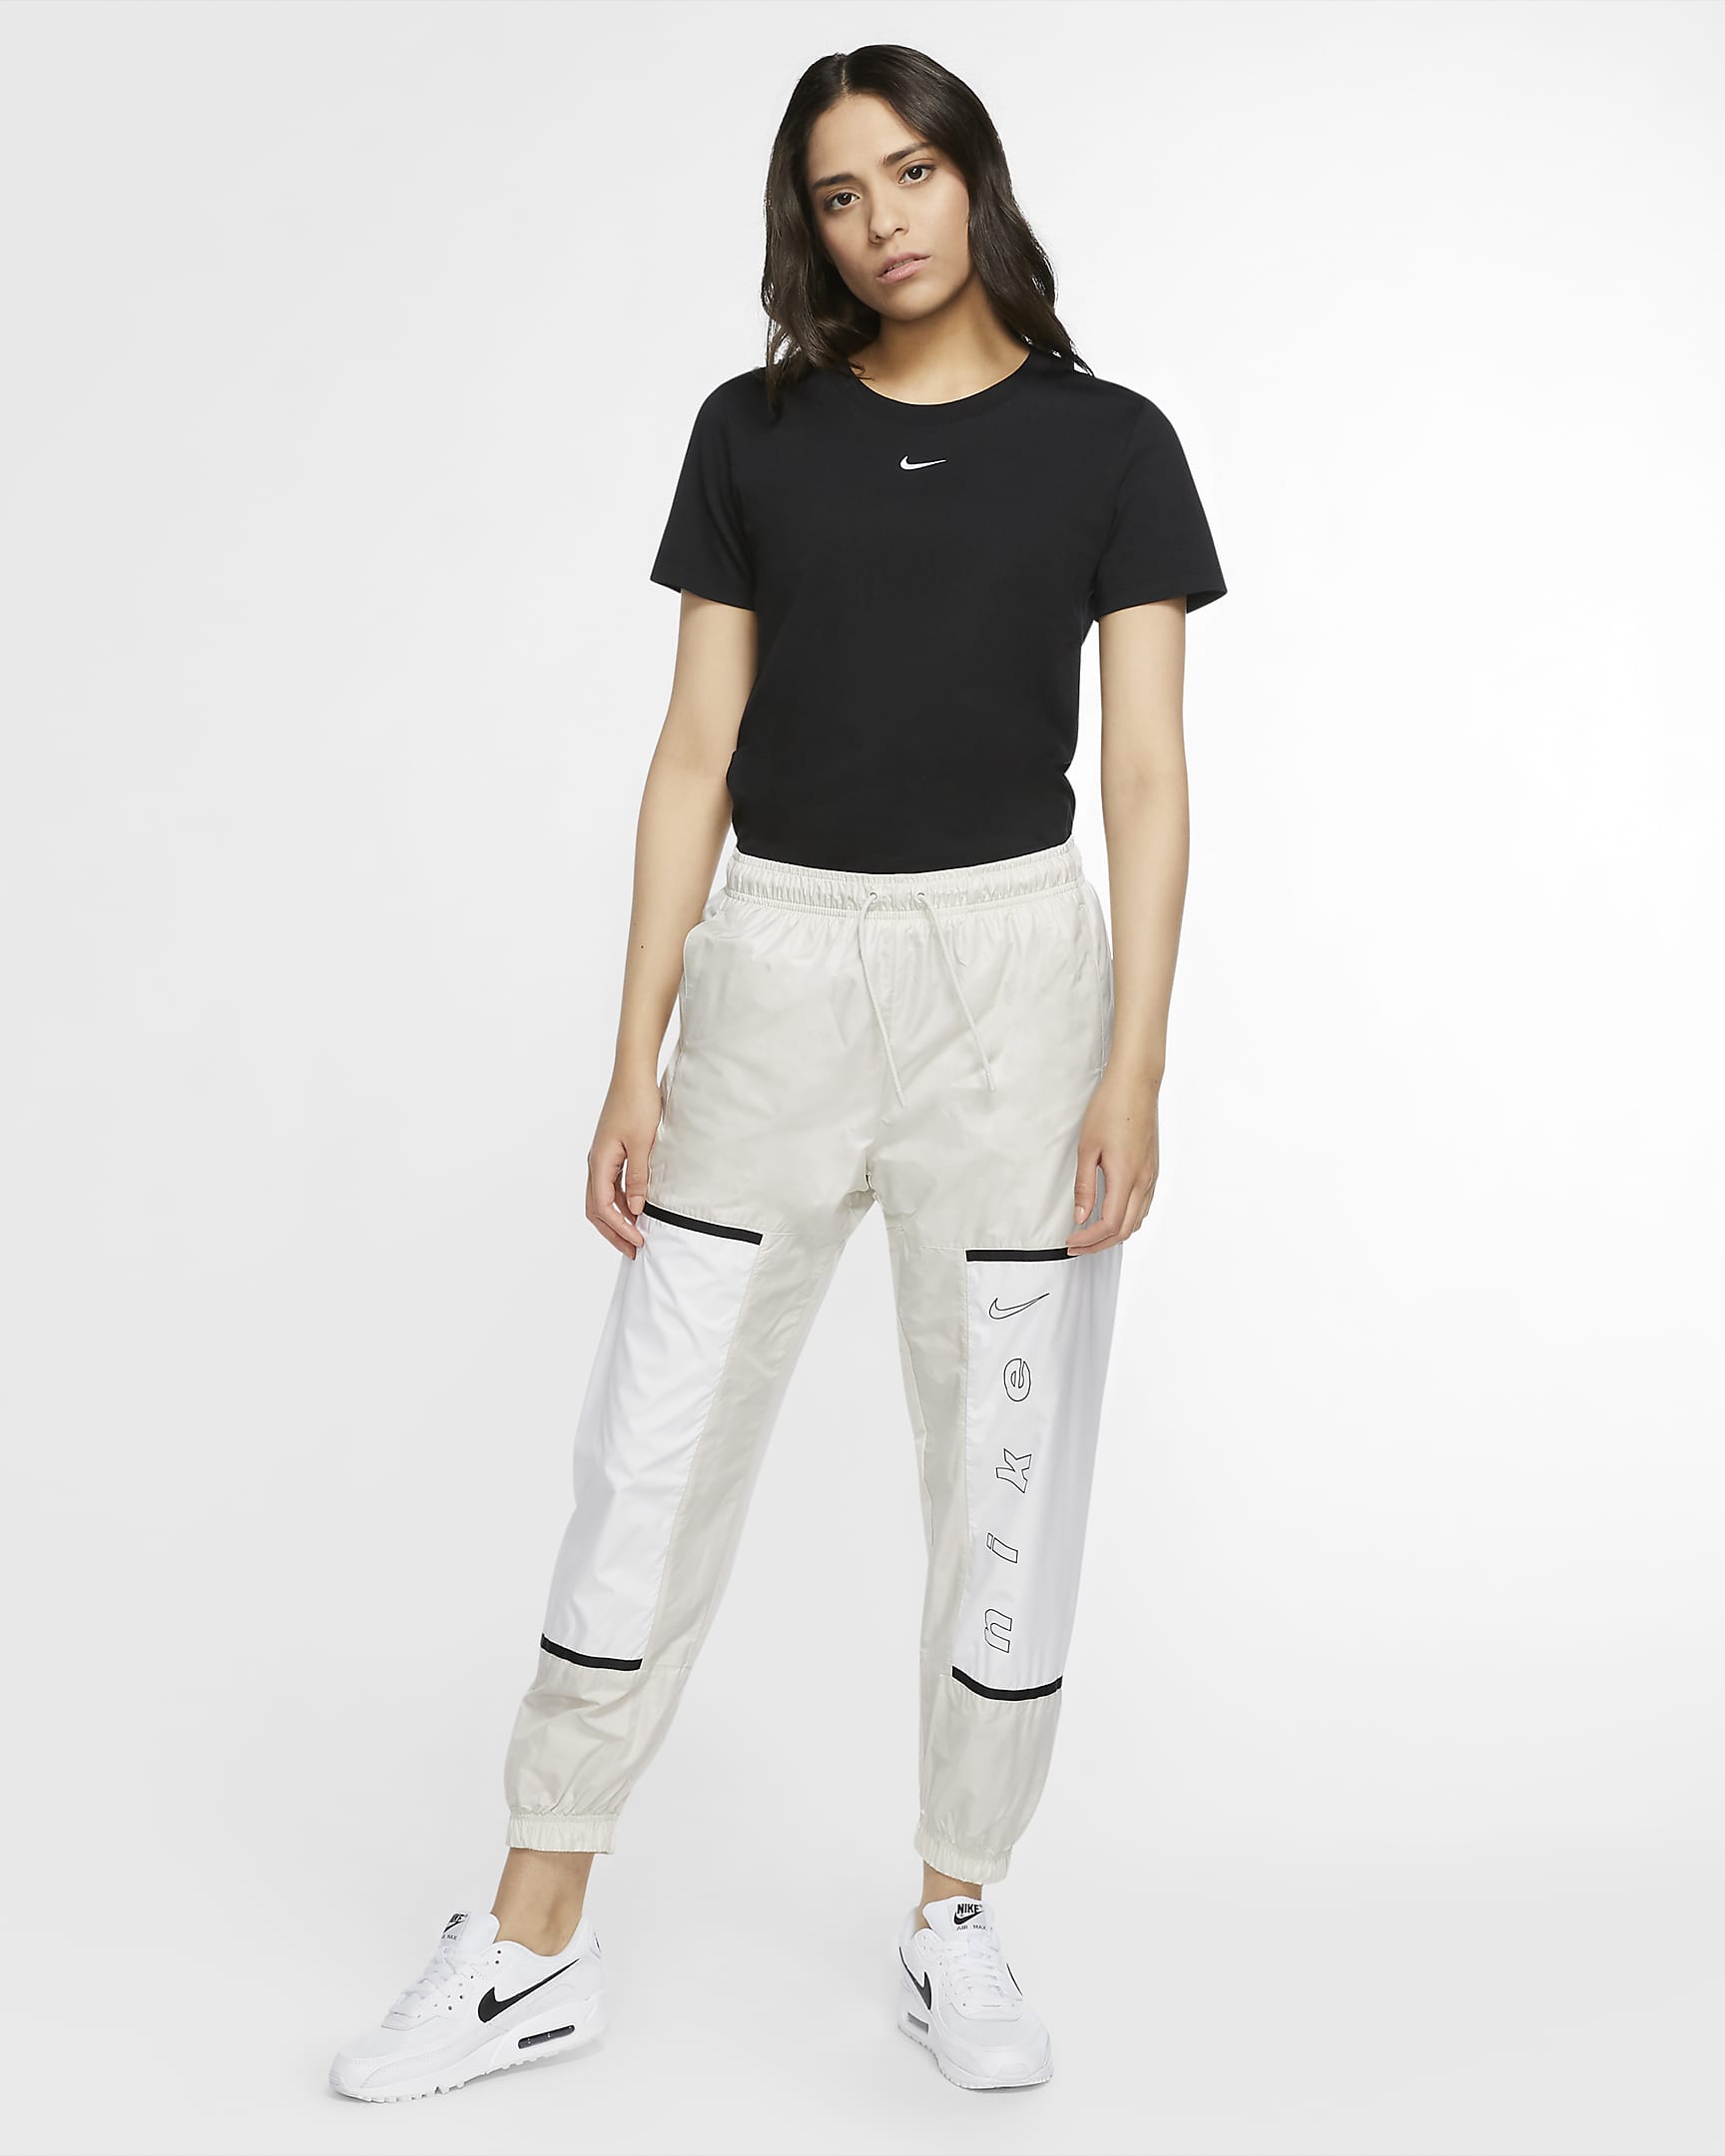 Nike Sportswear Damen-T-Shirt - Schwarz/Weiß